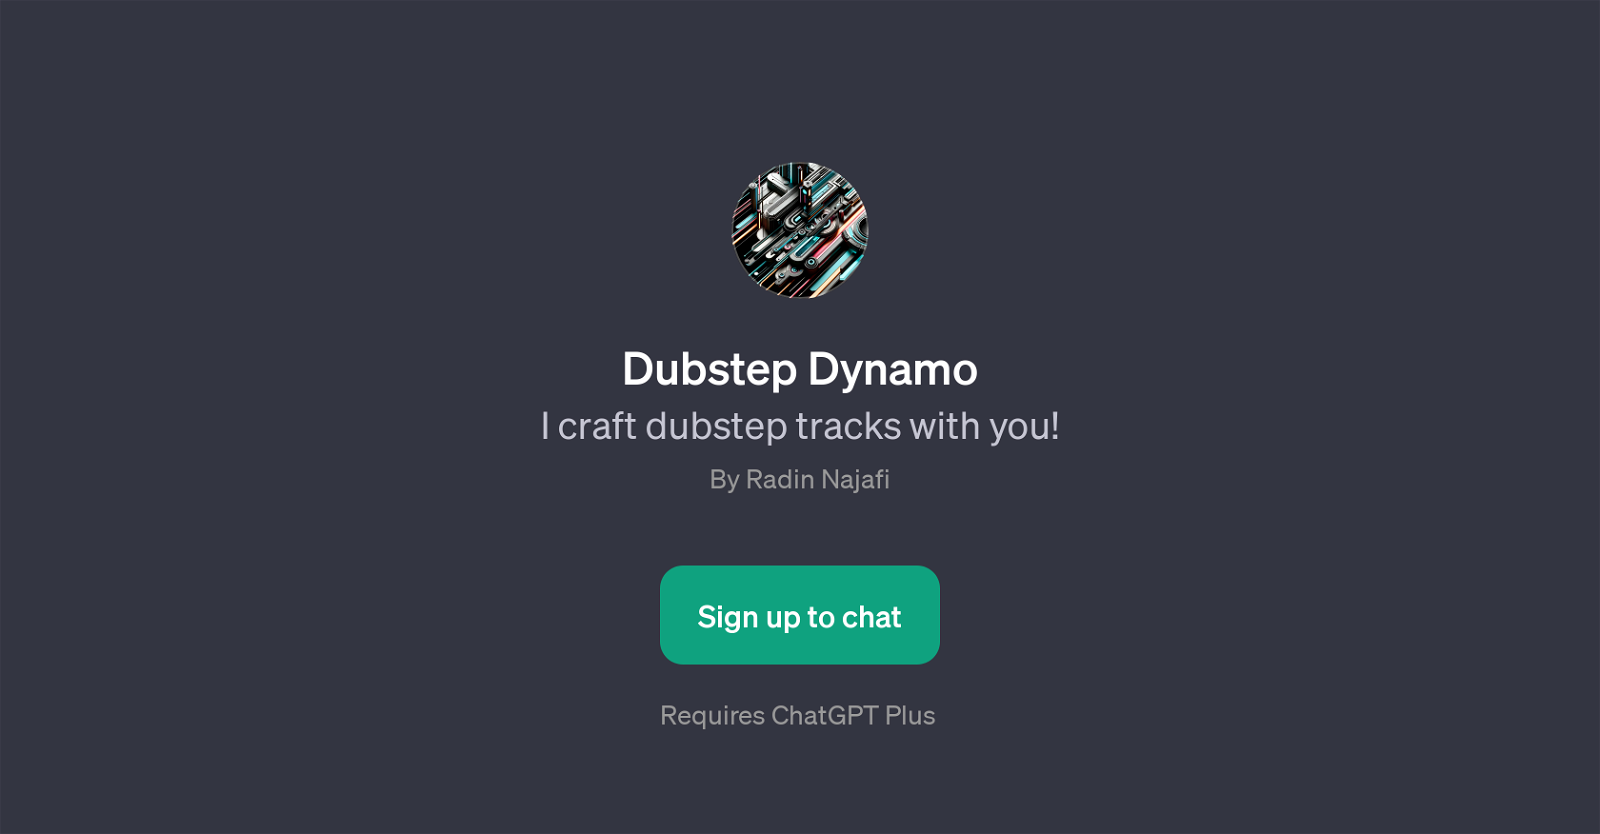 Dubstep Dynamo website